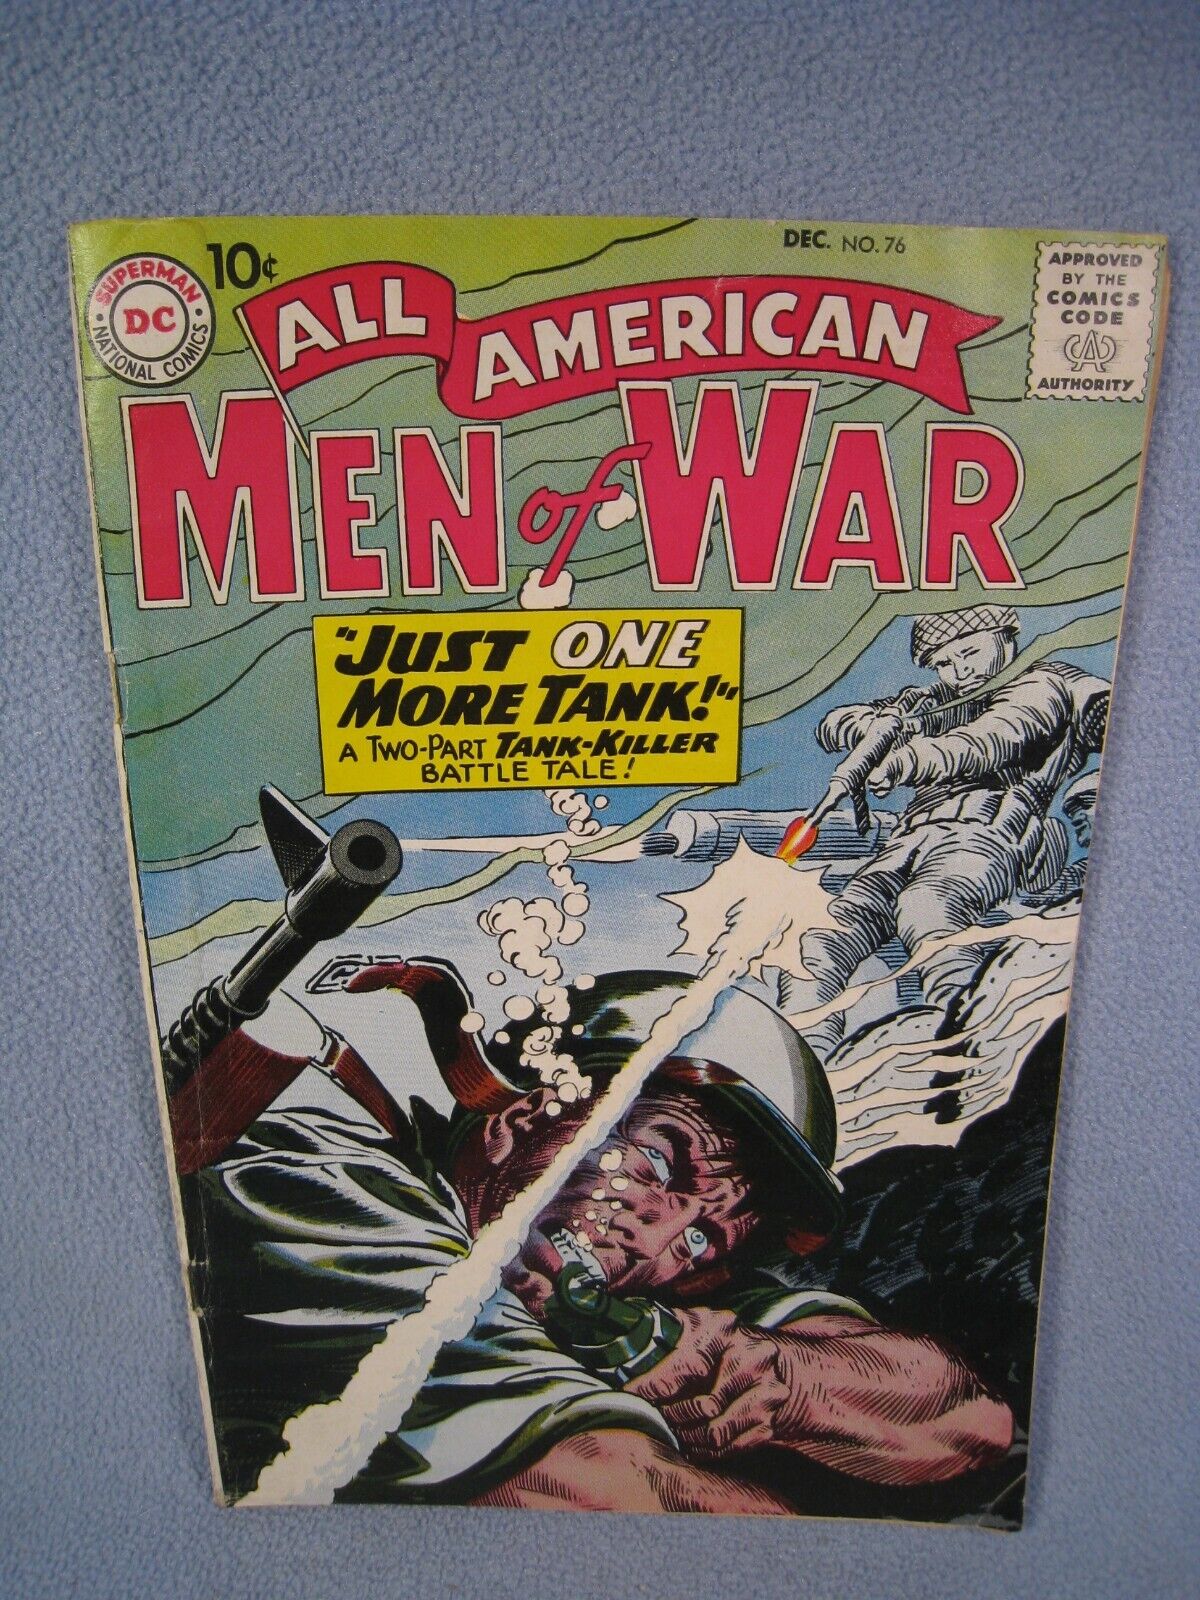 Vintage 1959 10 Cent All American Men of War Comic #76